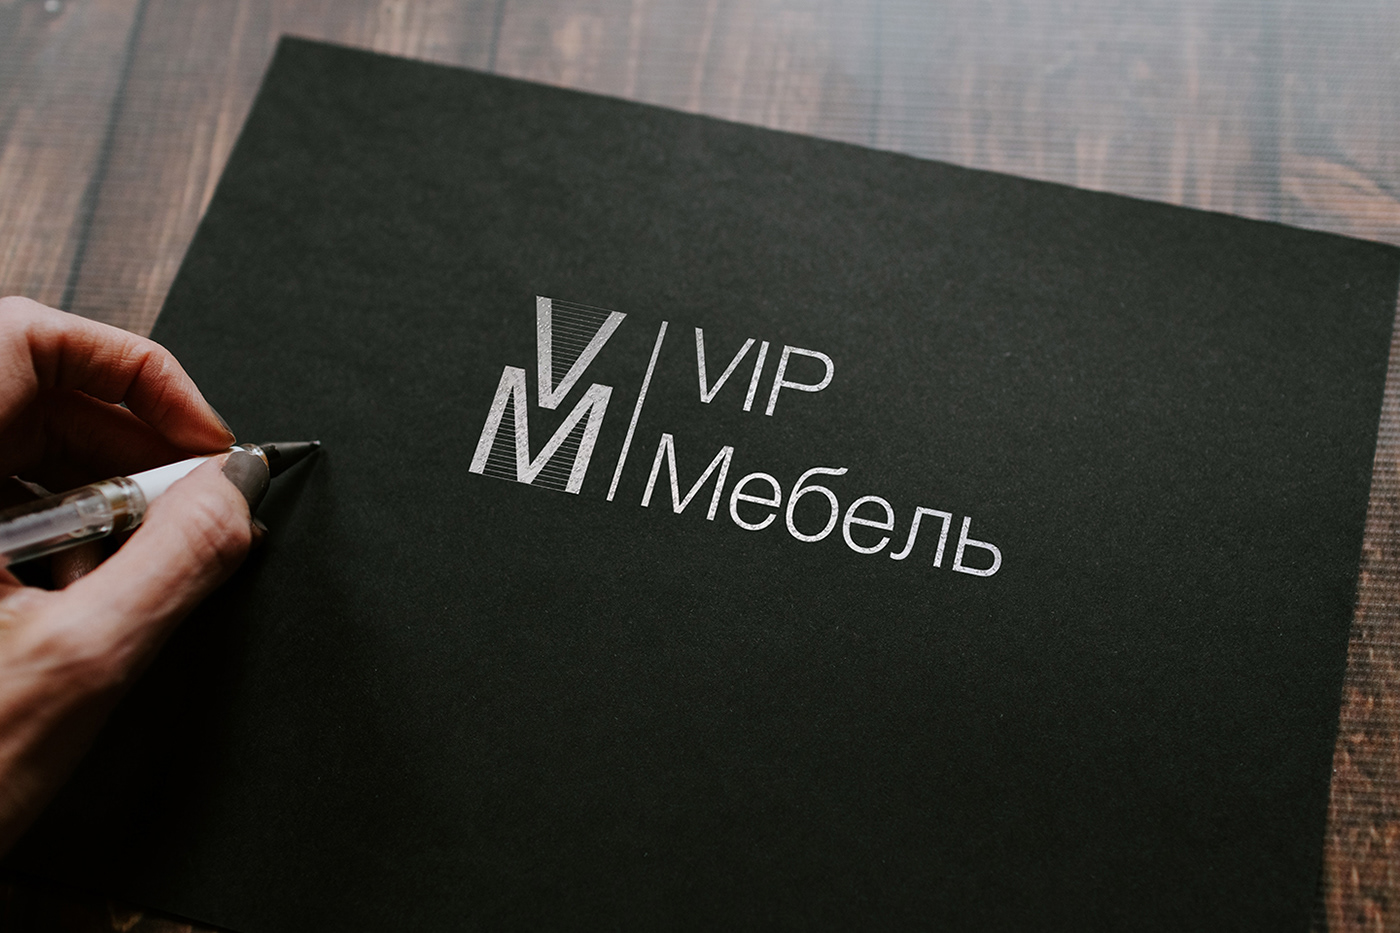 VIP Мебель UA vipmebel мебель ua furniture company pitaykingdesign design graphicdesign graphicdesigner